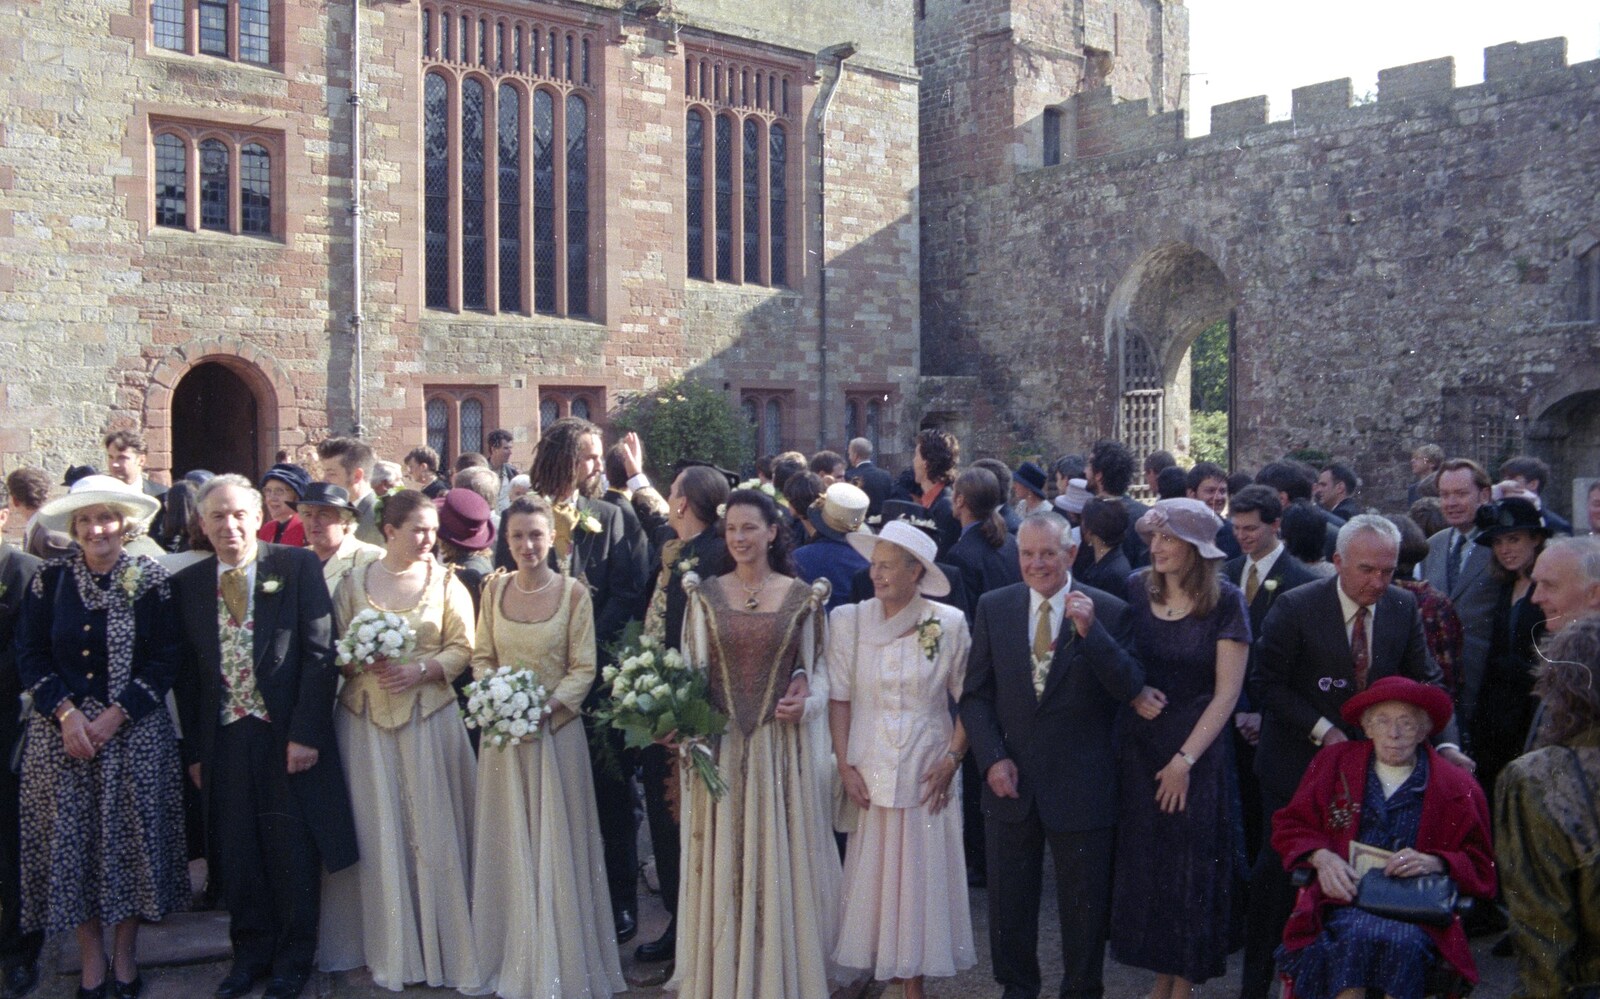 Stuart and Sarah's CISU Wedding, Naworth Castle, Brampton, Cumbria - 21st September 1996: A courtyard gathering